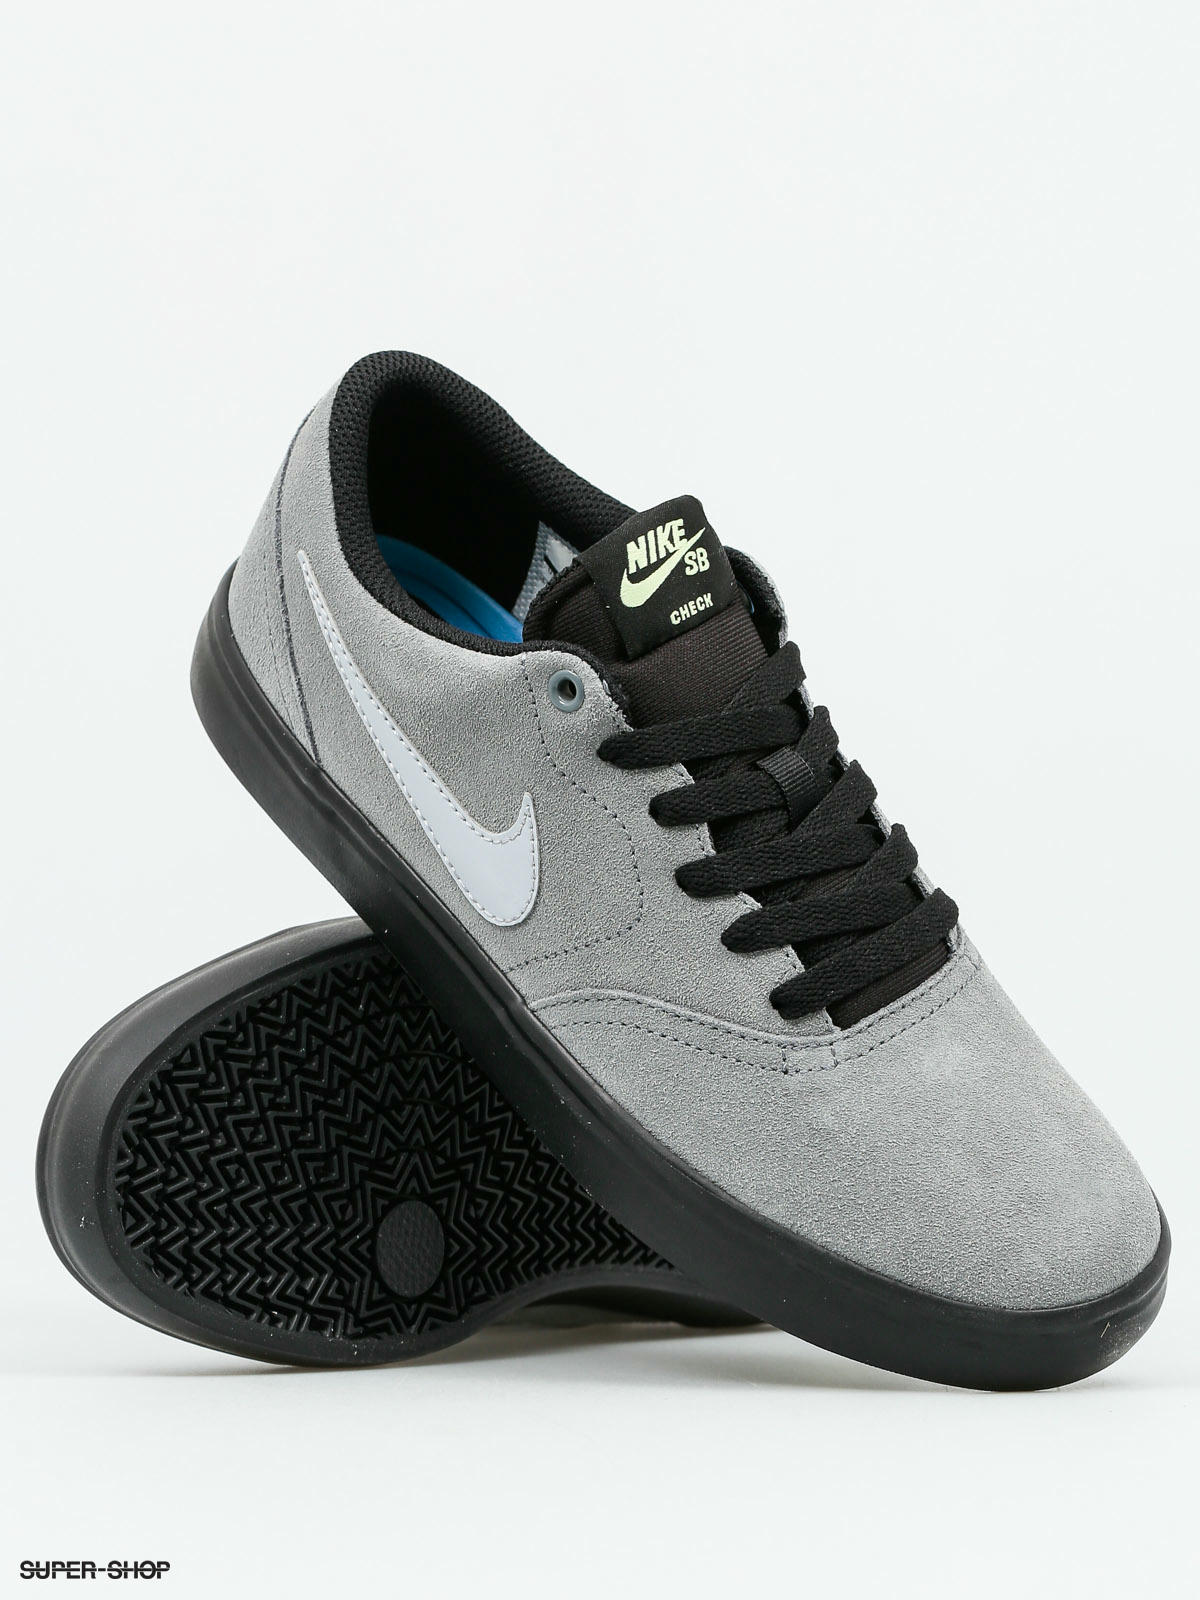 beklimmen Wereldvenster Bemiddelen Nike SB Shoes Check Solar (cool grey/wolf grey black bare)